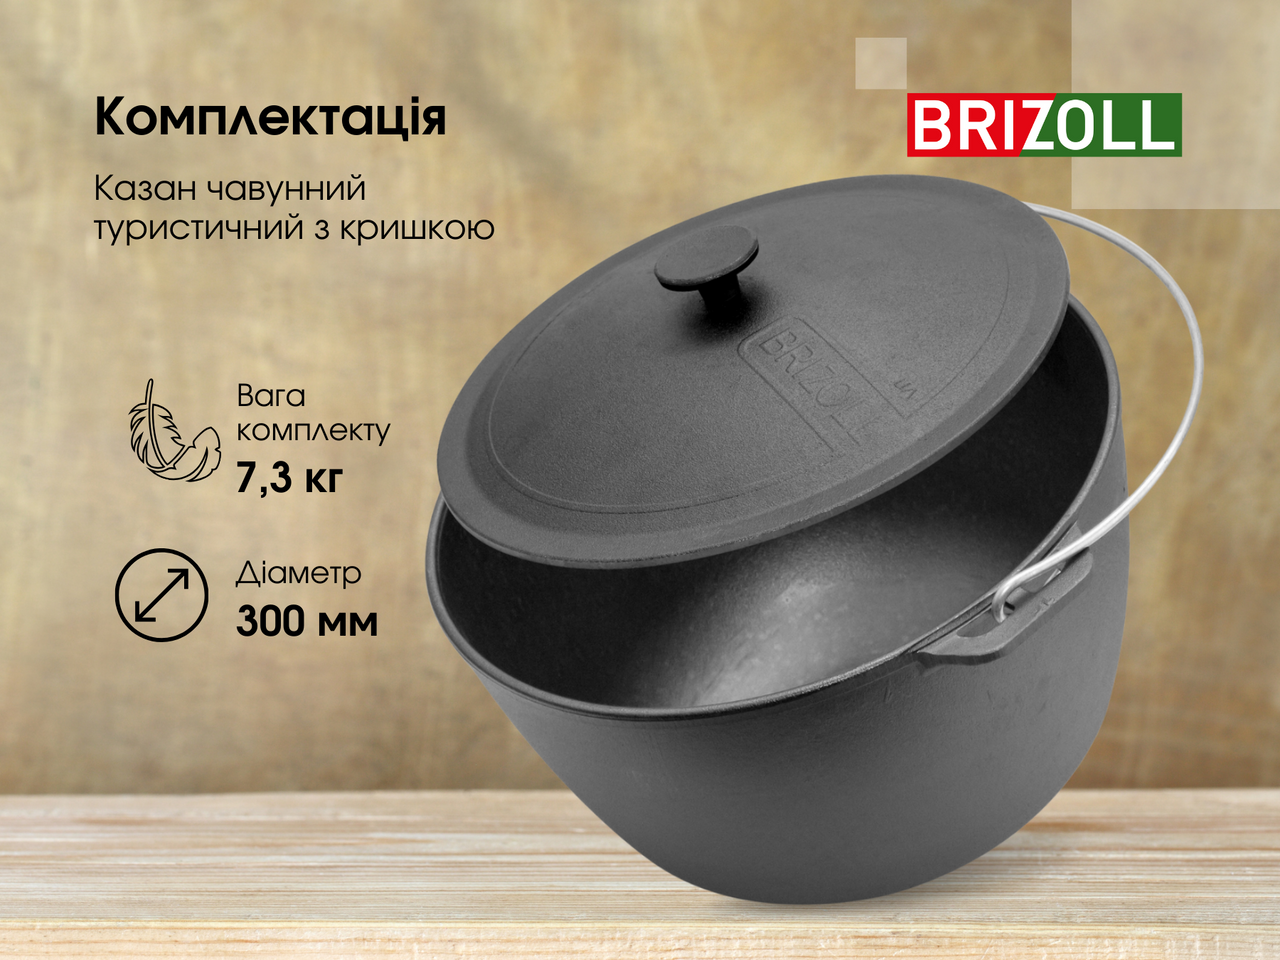 Cast iron tourist cauldron 10 L with a lid, a bag and tripod